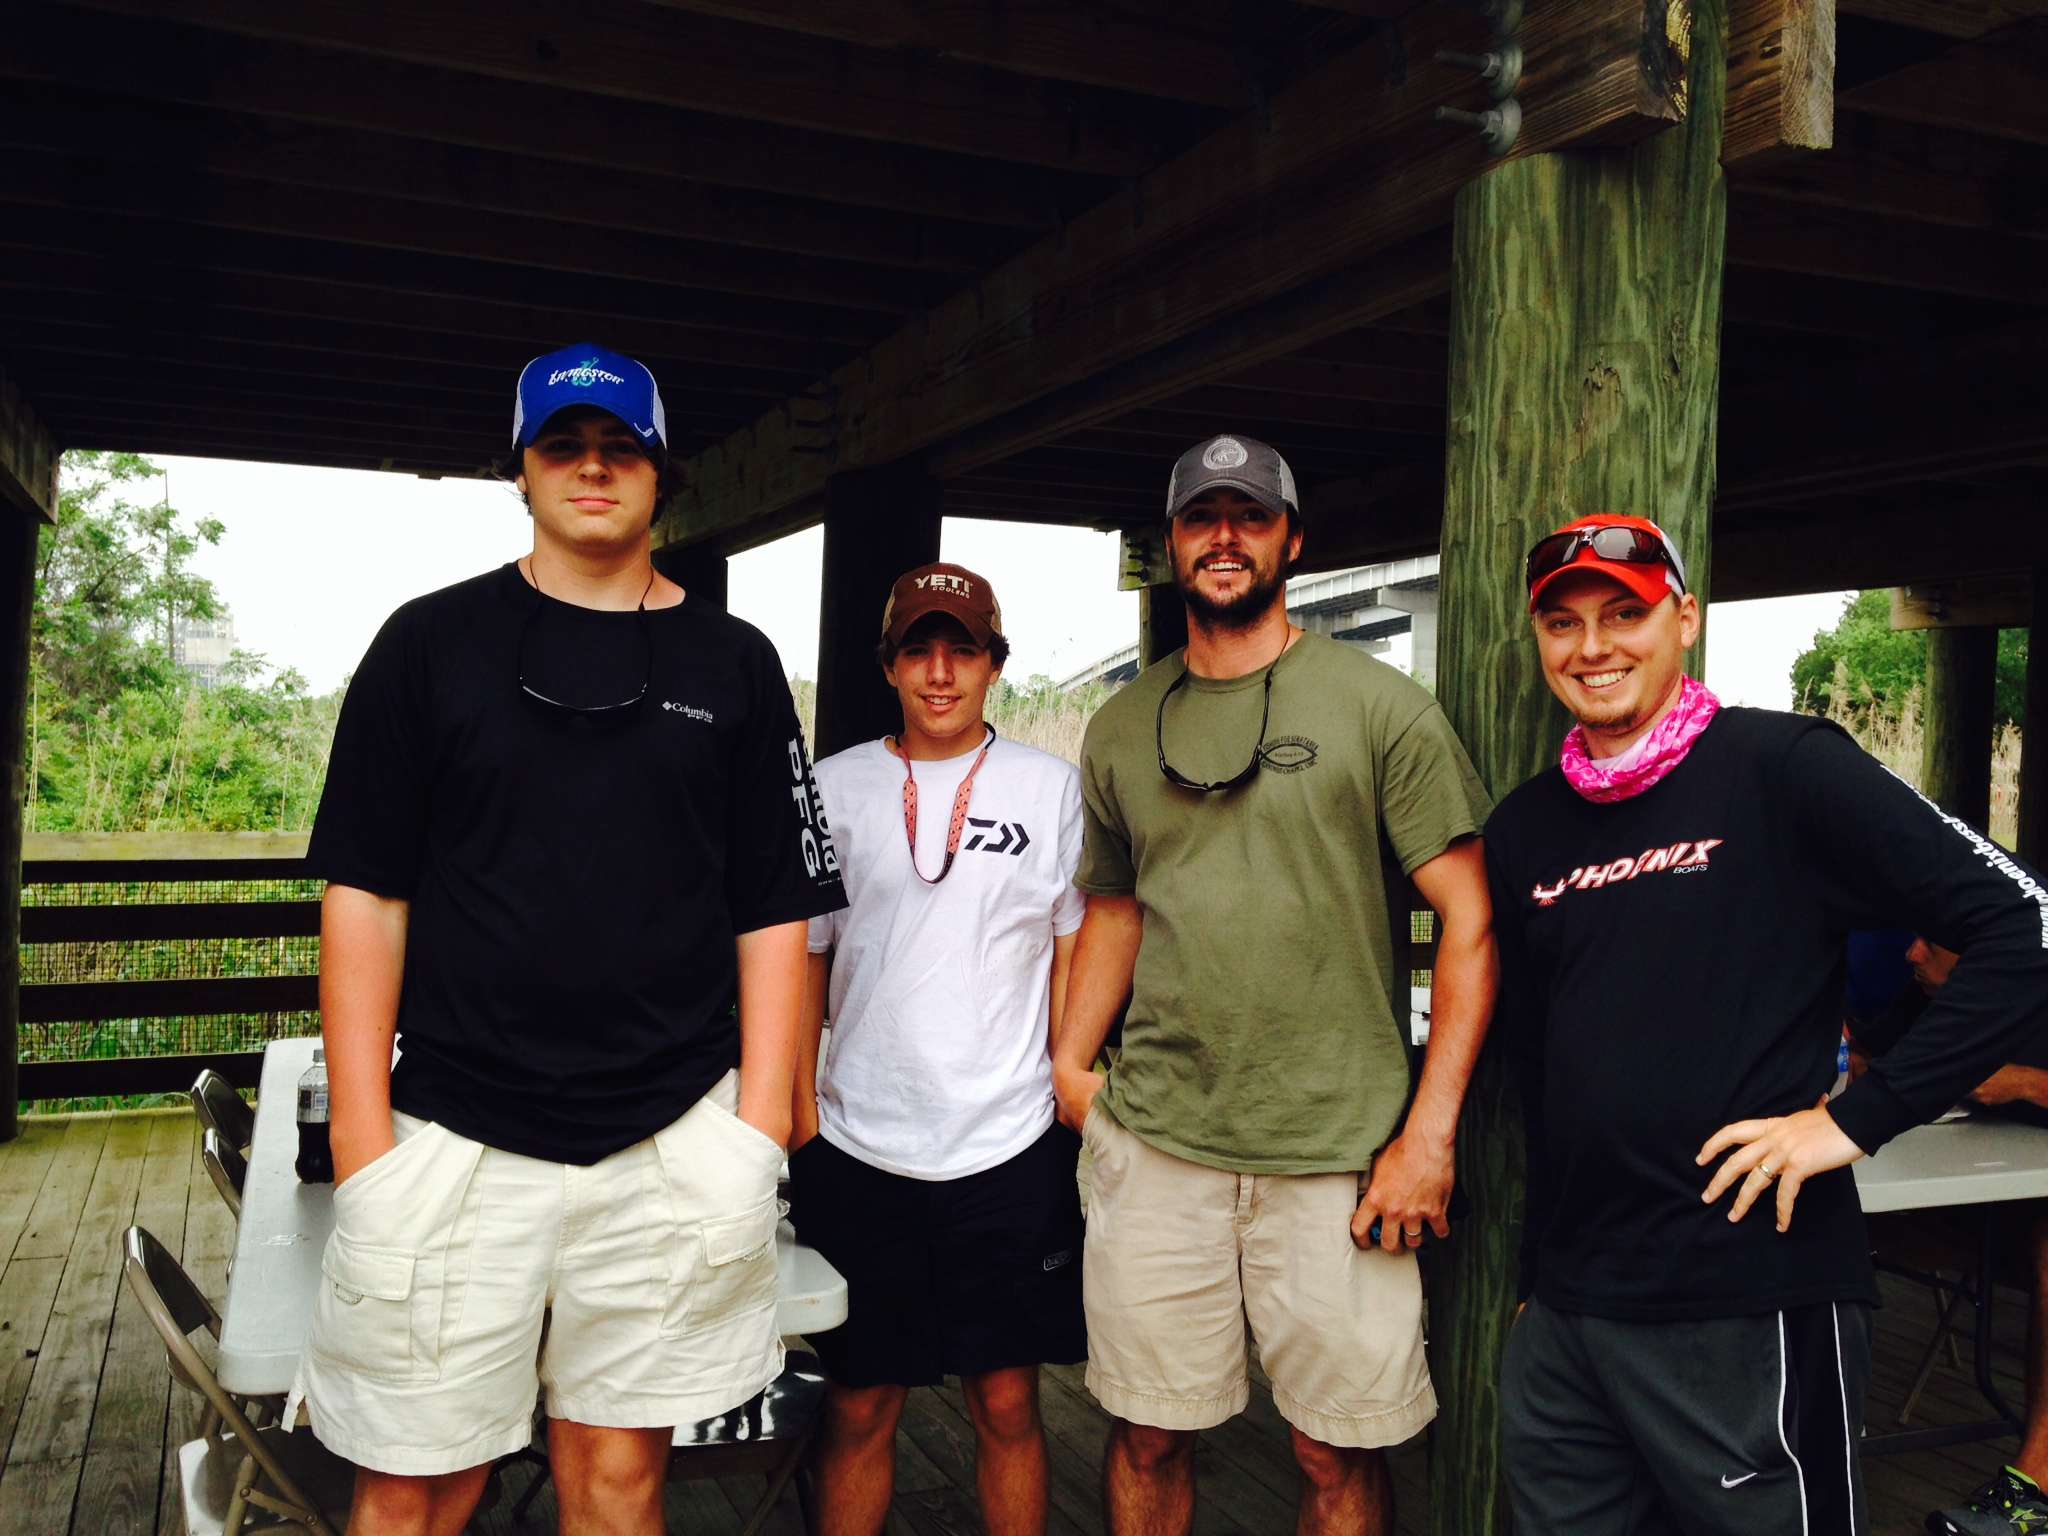 The Tuscaloosa County High School team including boat captain Brandon Ligon.